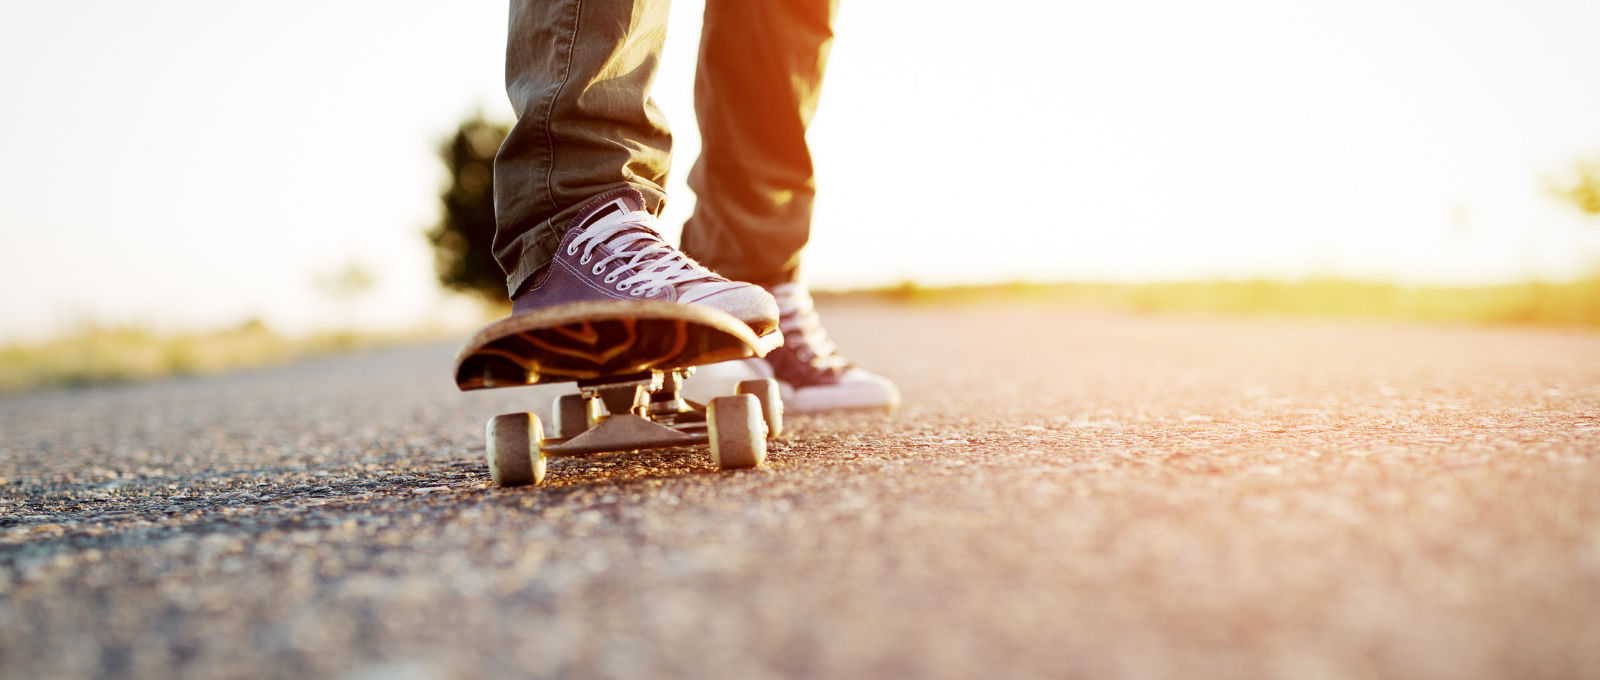 Feet of teenager standing on skateboard